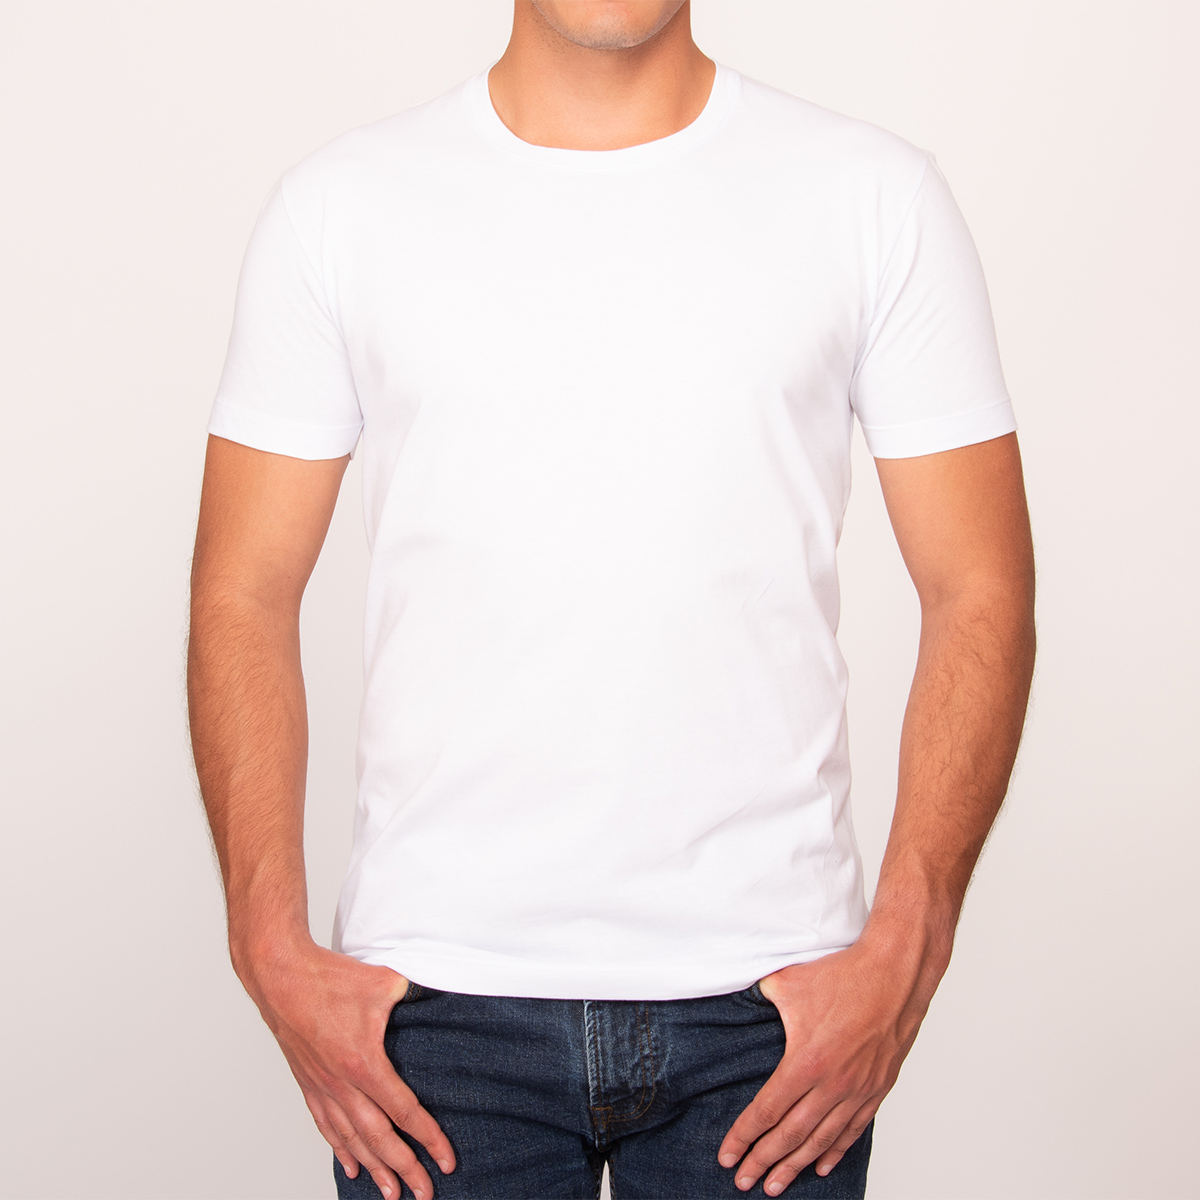 Camiseta con frase blanca hombre buena onda black bebas